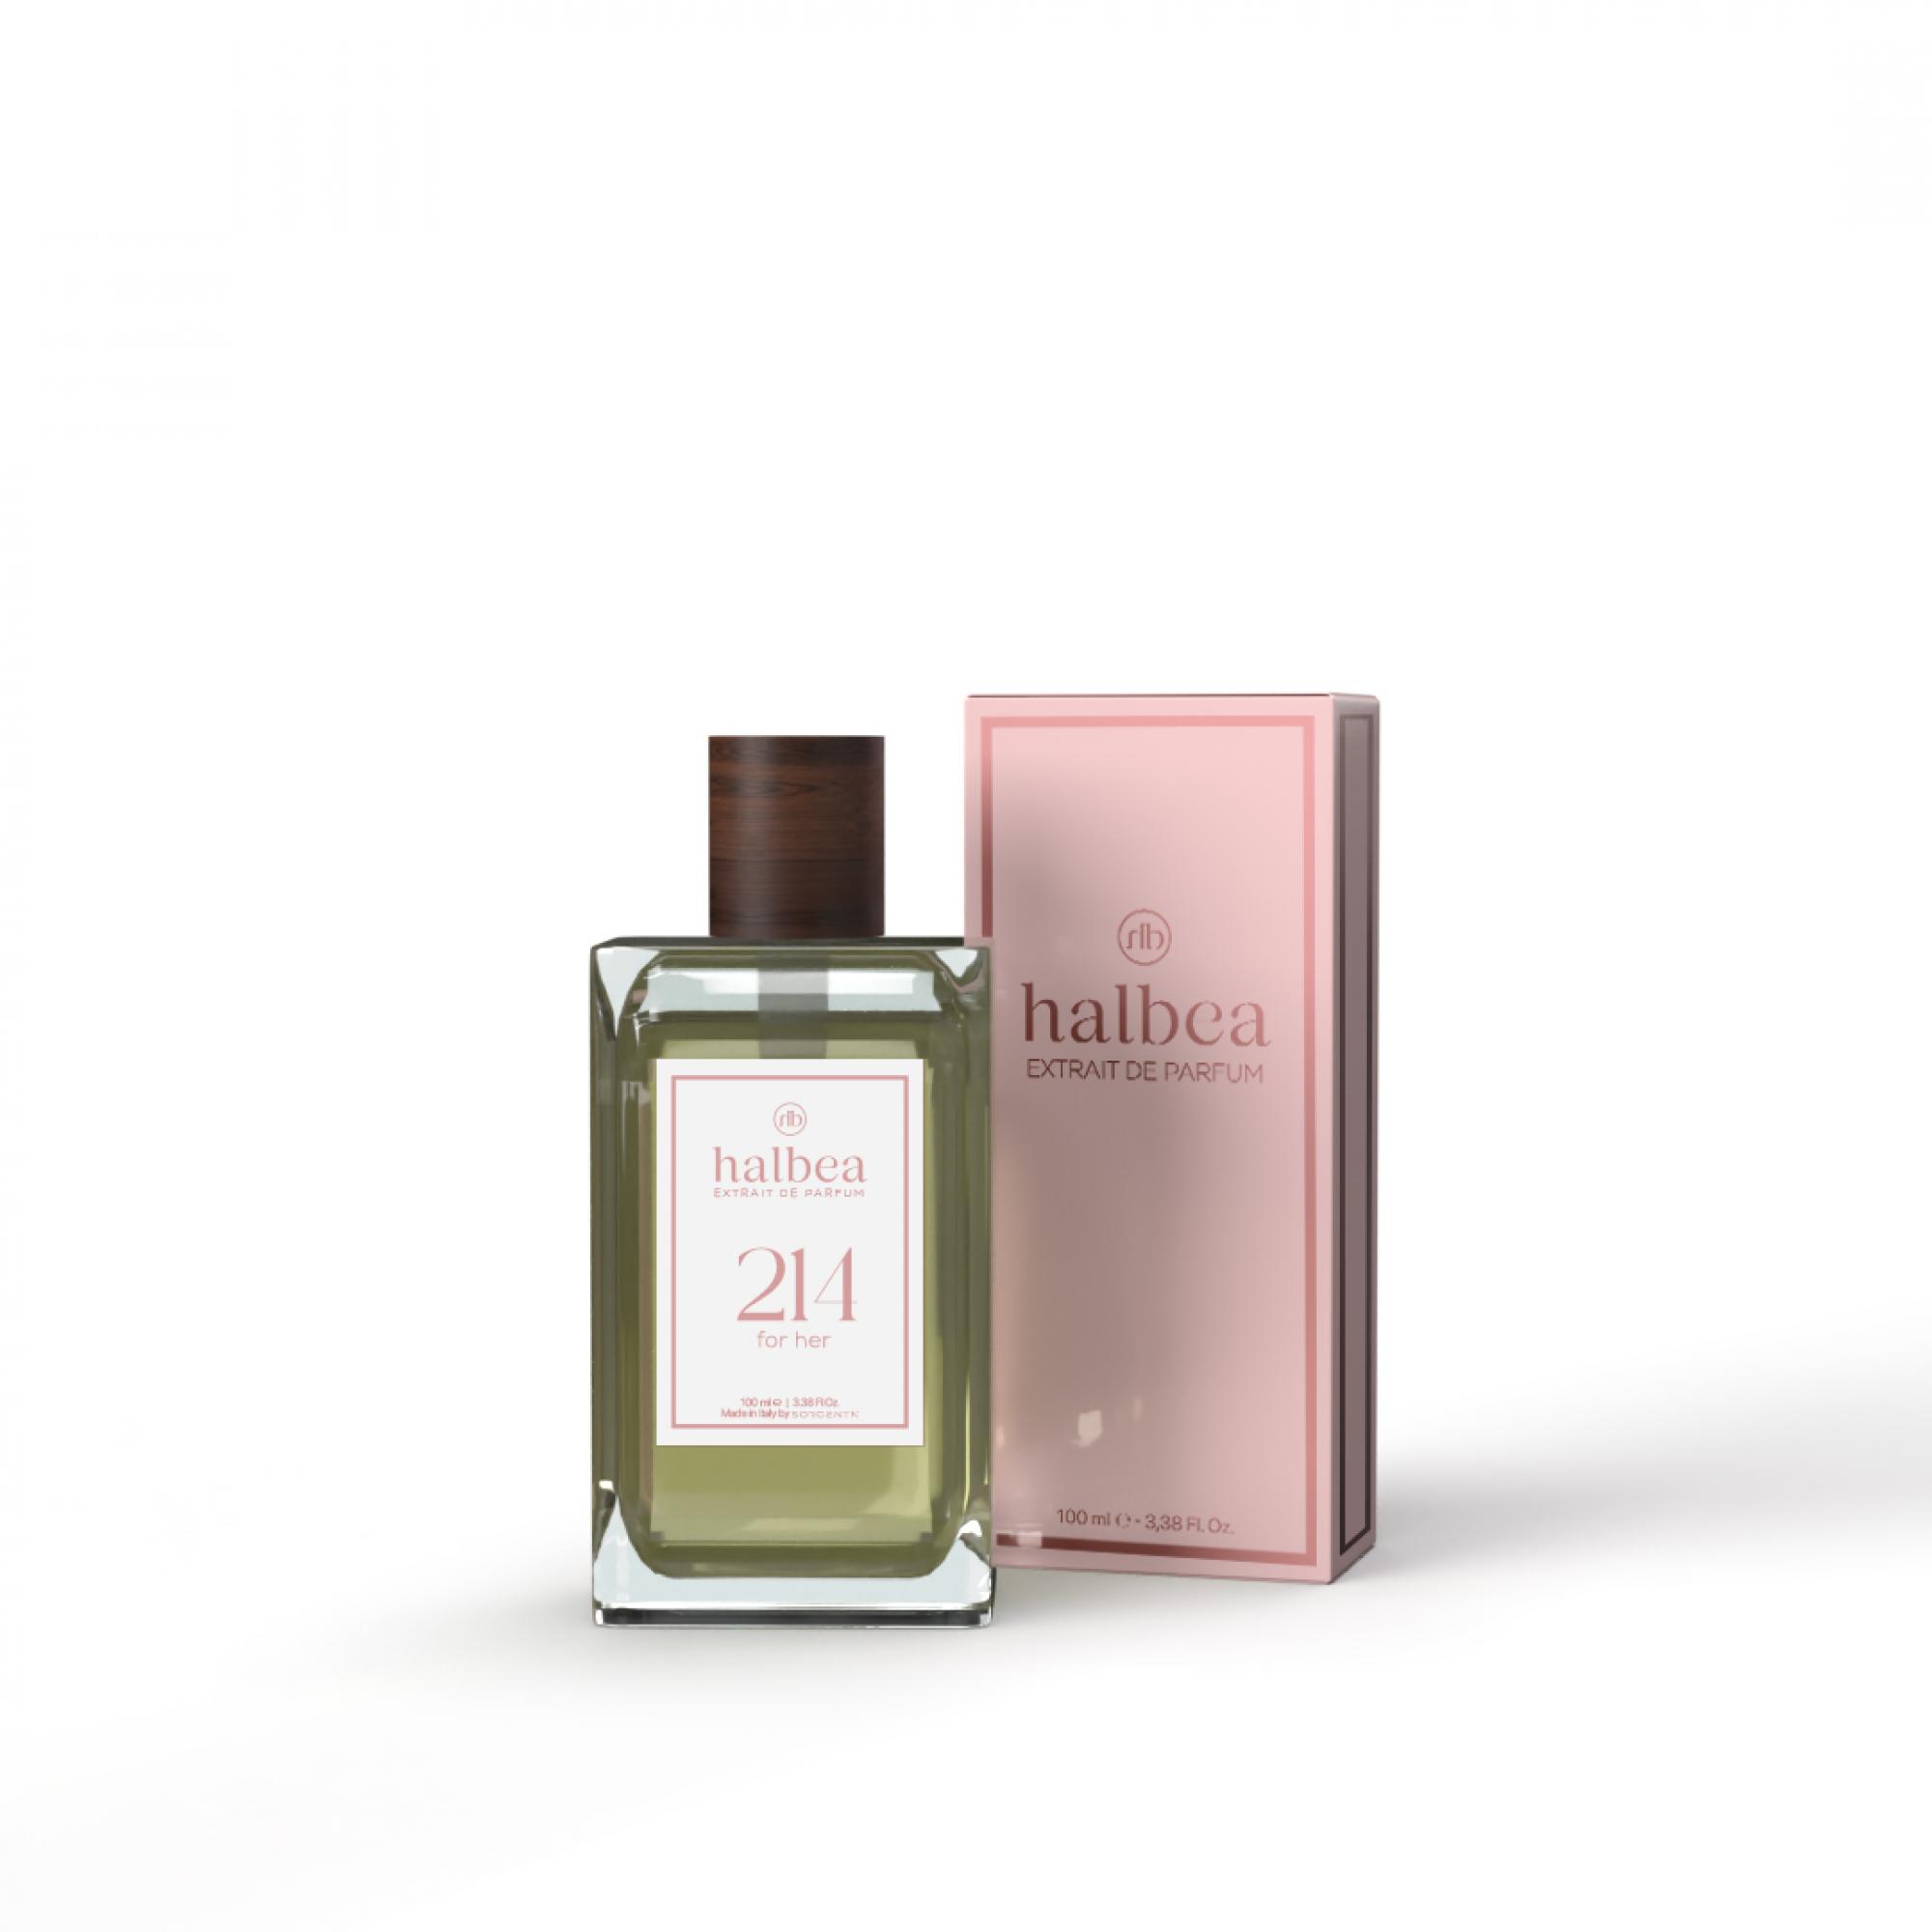 Halbea Parfum Nr. 214 insp. by Dsquared2 Red Wood Sorgenta 100ml